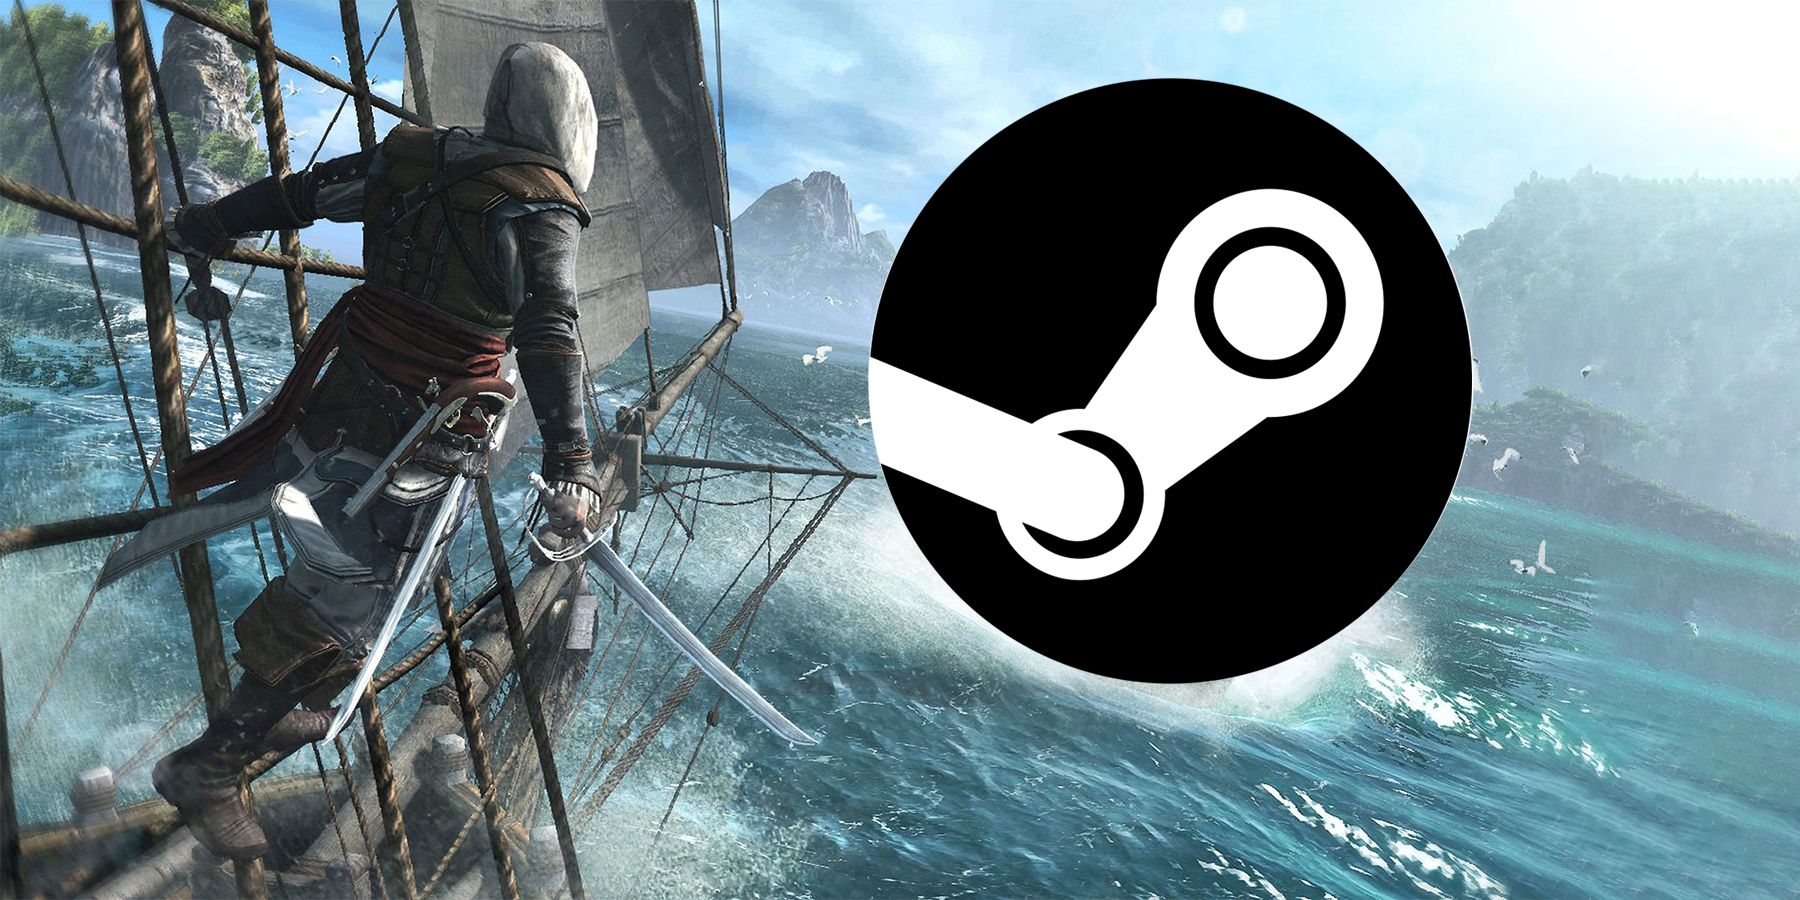 Assassin's Creed 4 Black Flag Kenway hanging from shrouds looking at Steam logo emblem artwork edit